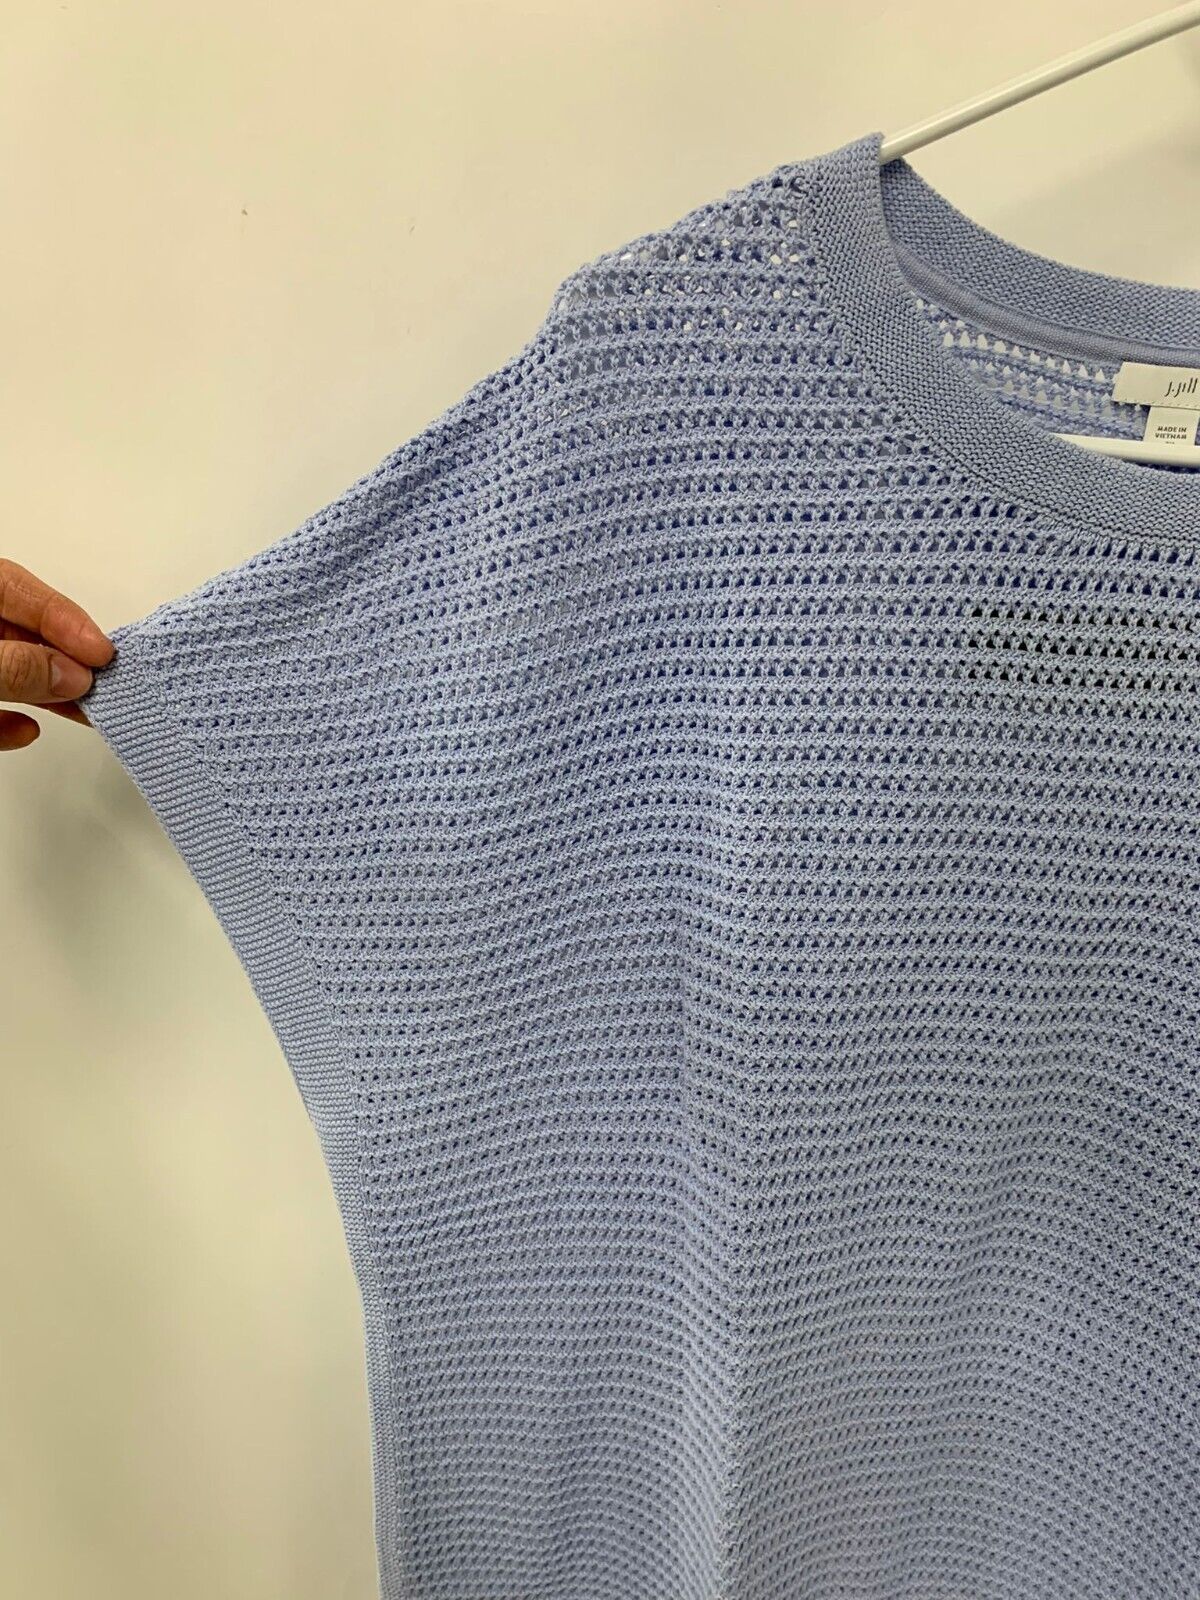 J Jill Womens 2X Textured Open Stitch Sweater Knit Poncho Tunic Pale Blue